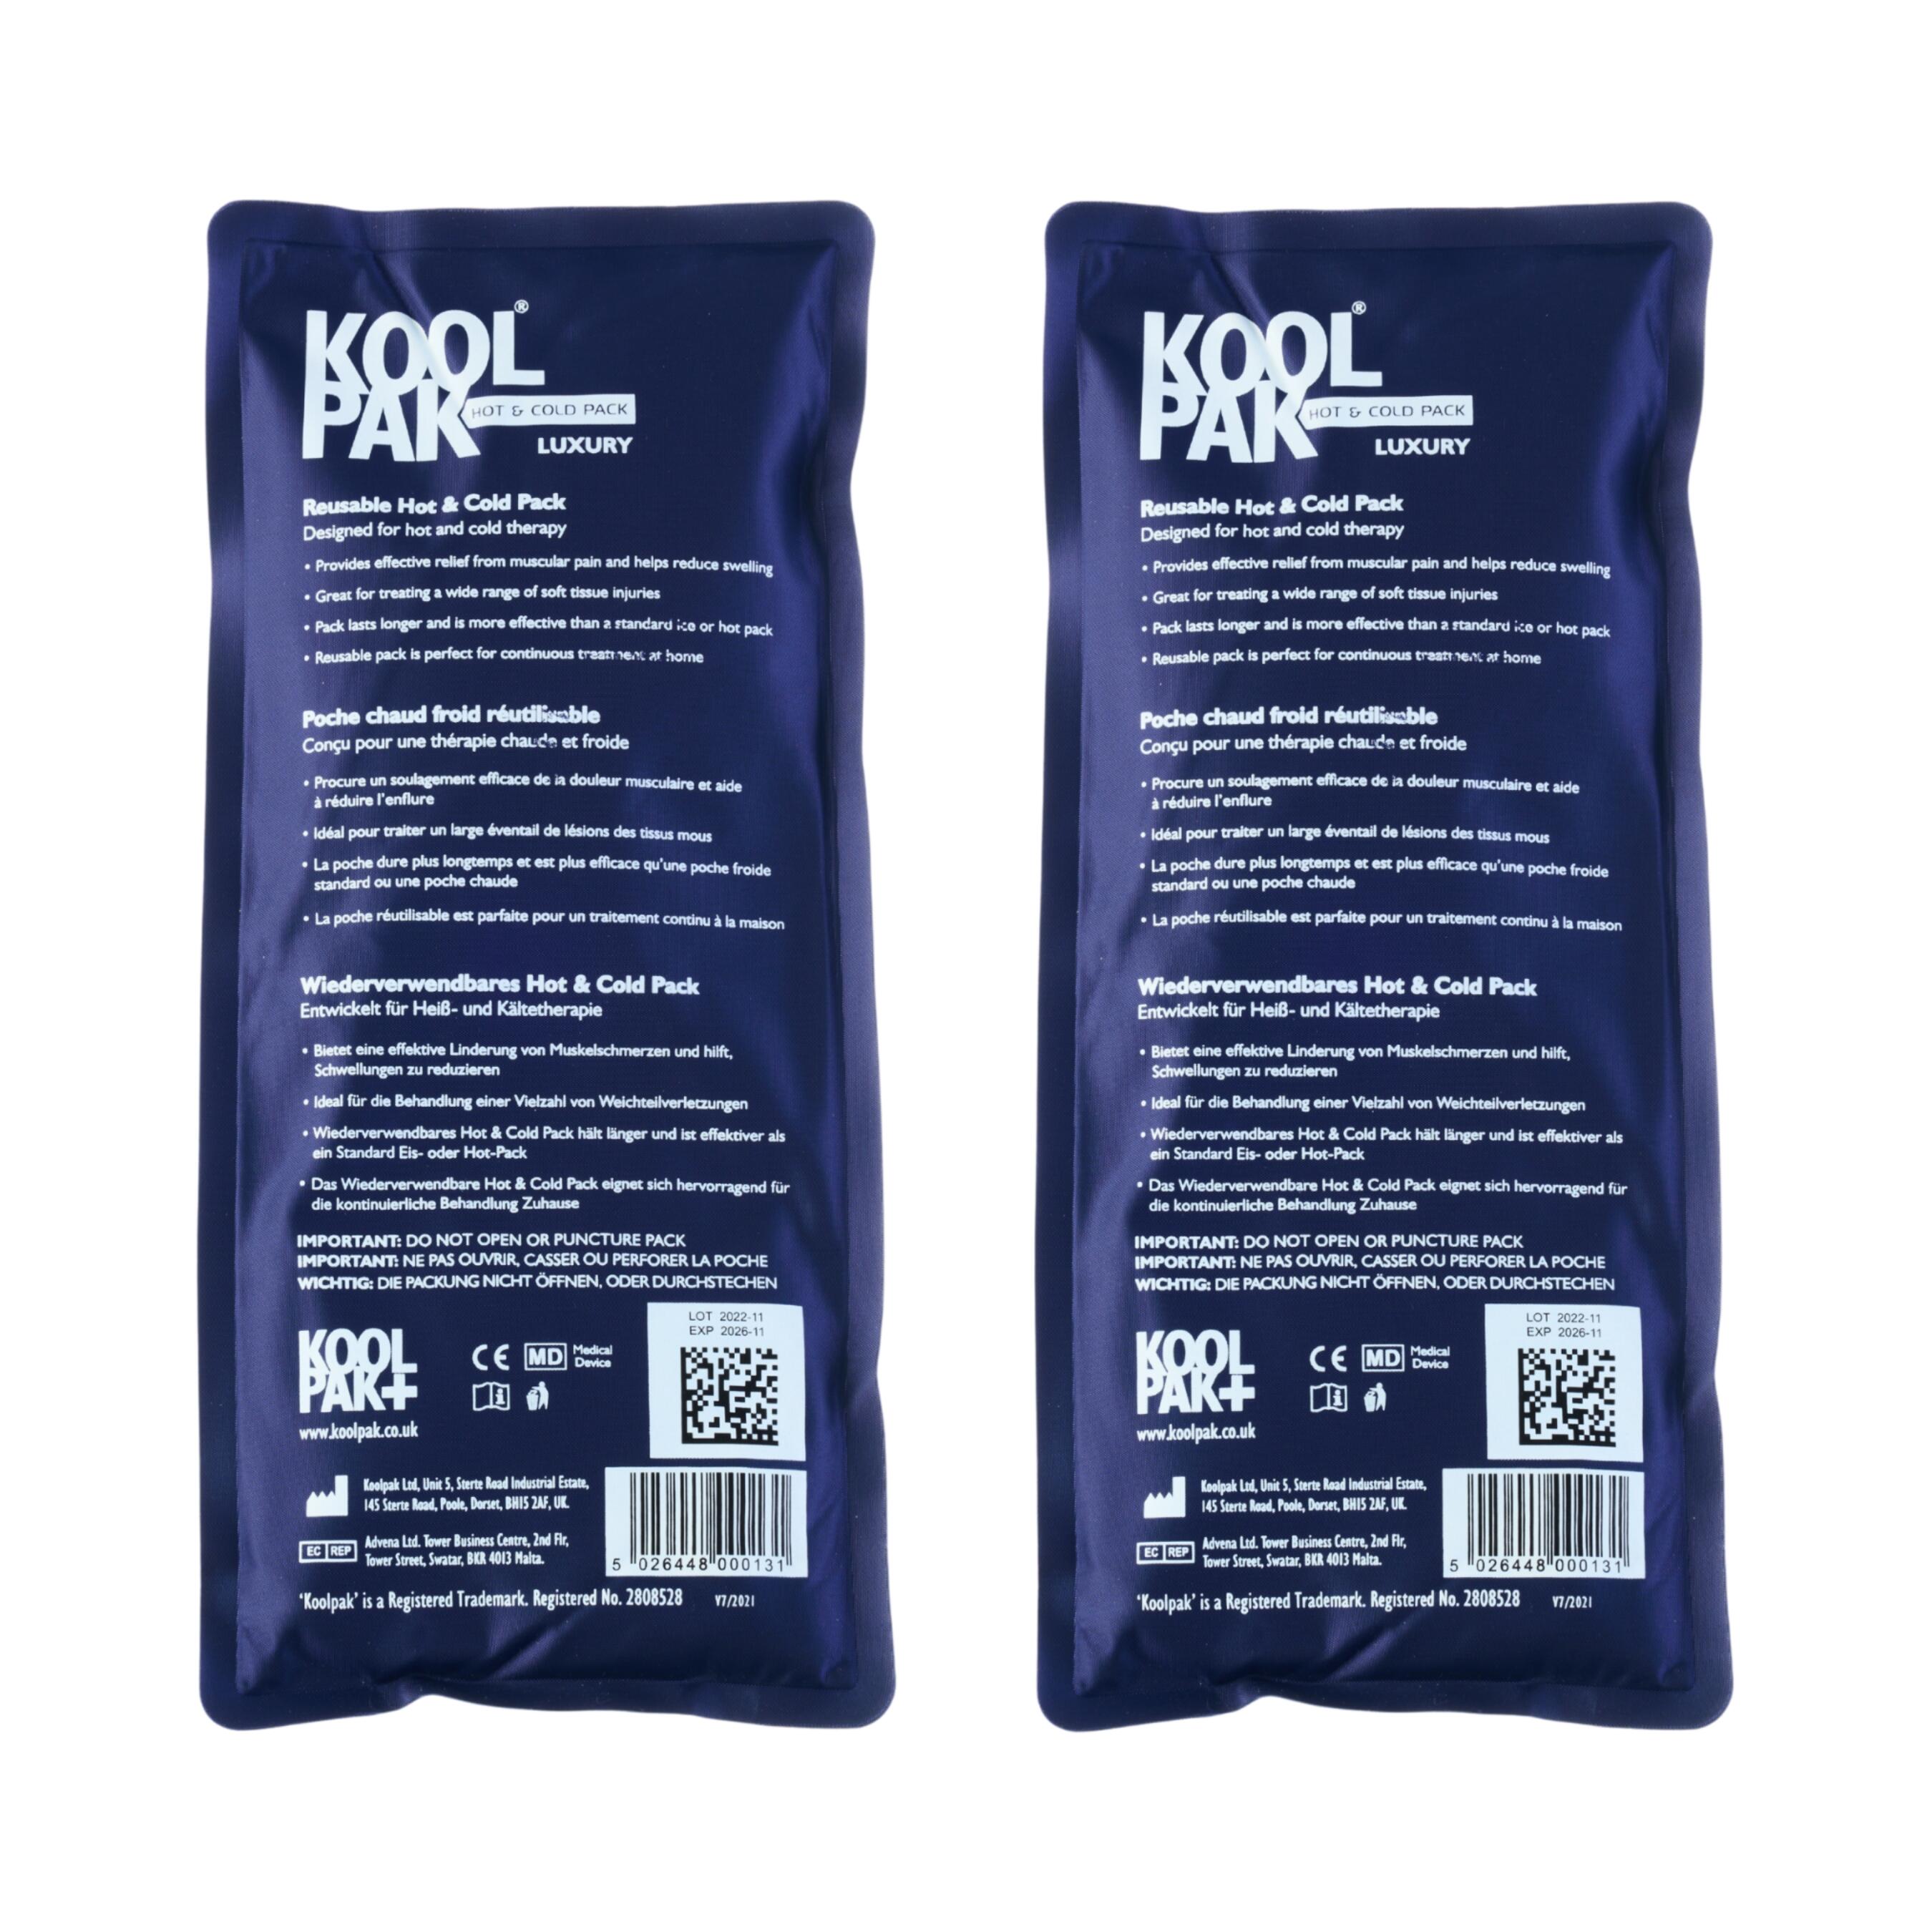 Koolpak Luxury Reusable Hot & Cold Pack - 12 X 29cm - Pack Of 20 1/5